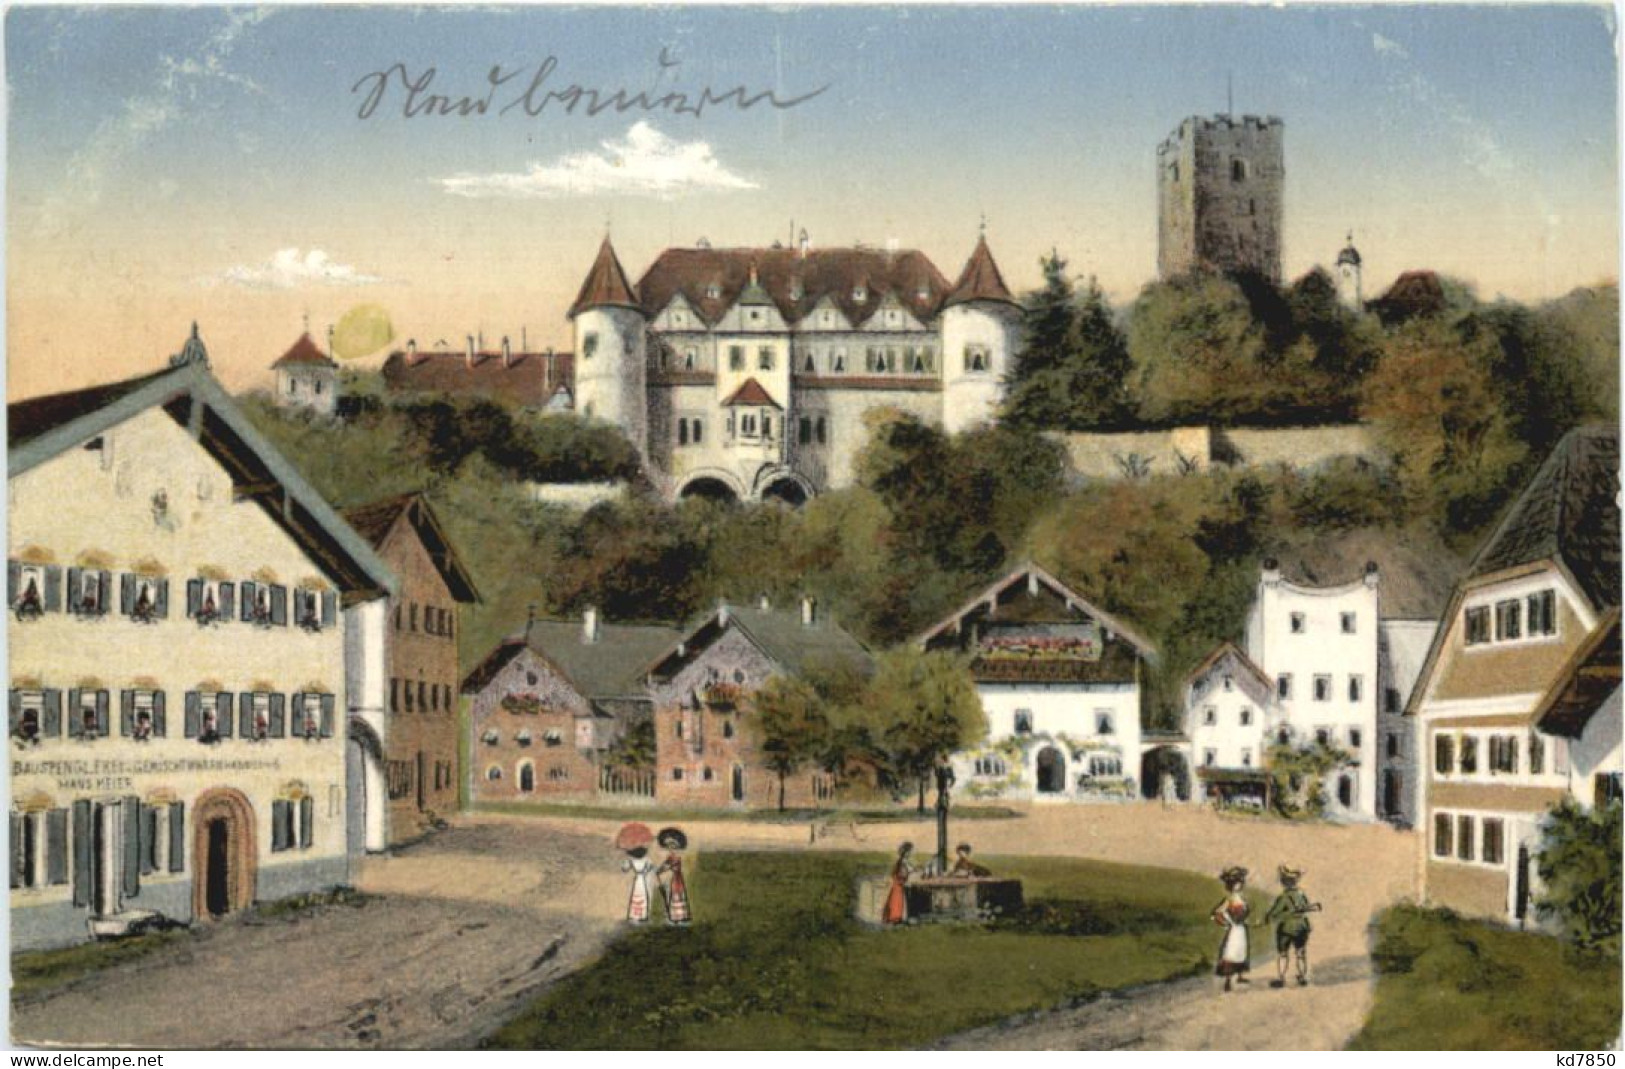 Neubeuern A. Inn - Rosenheim